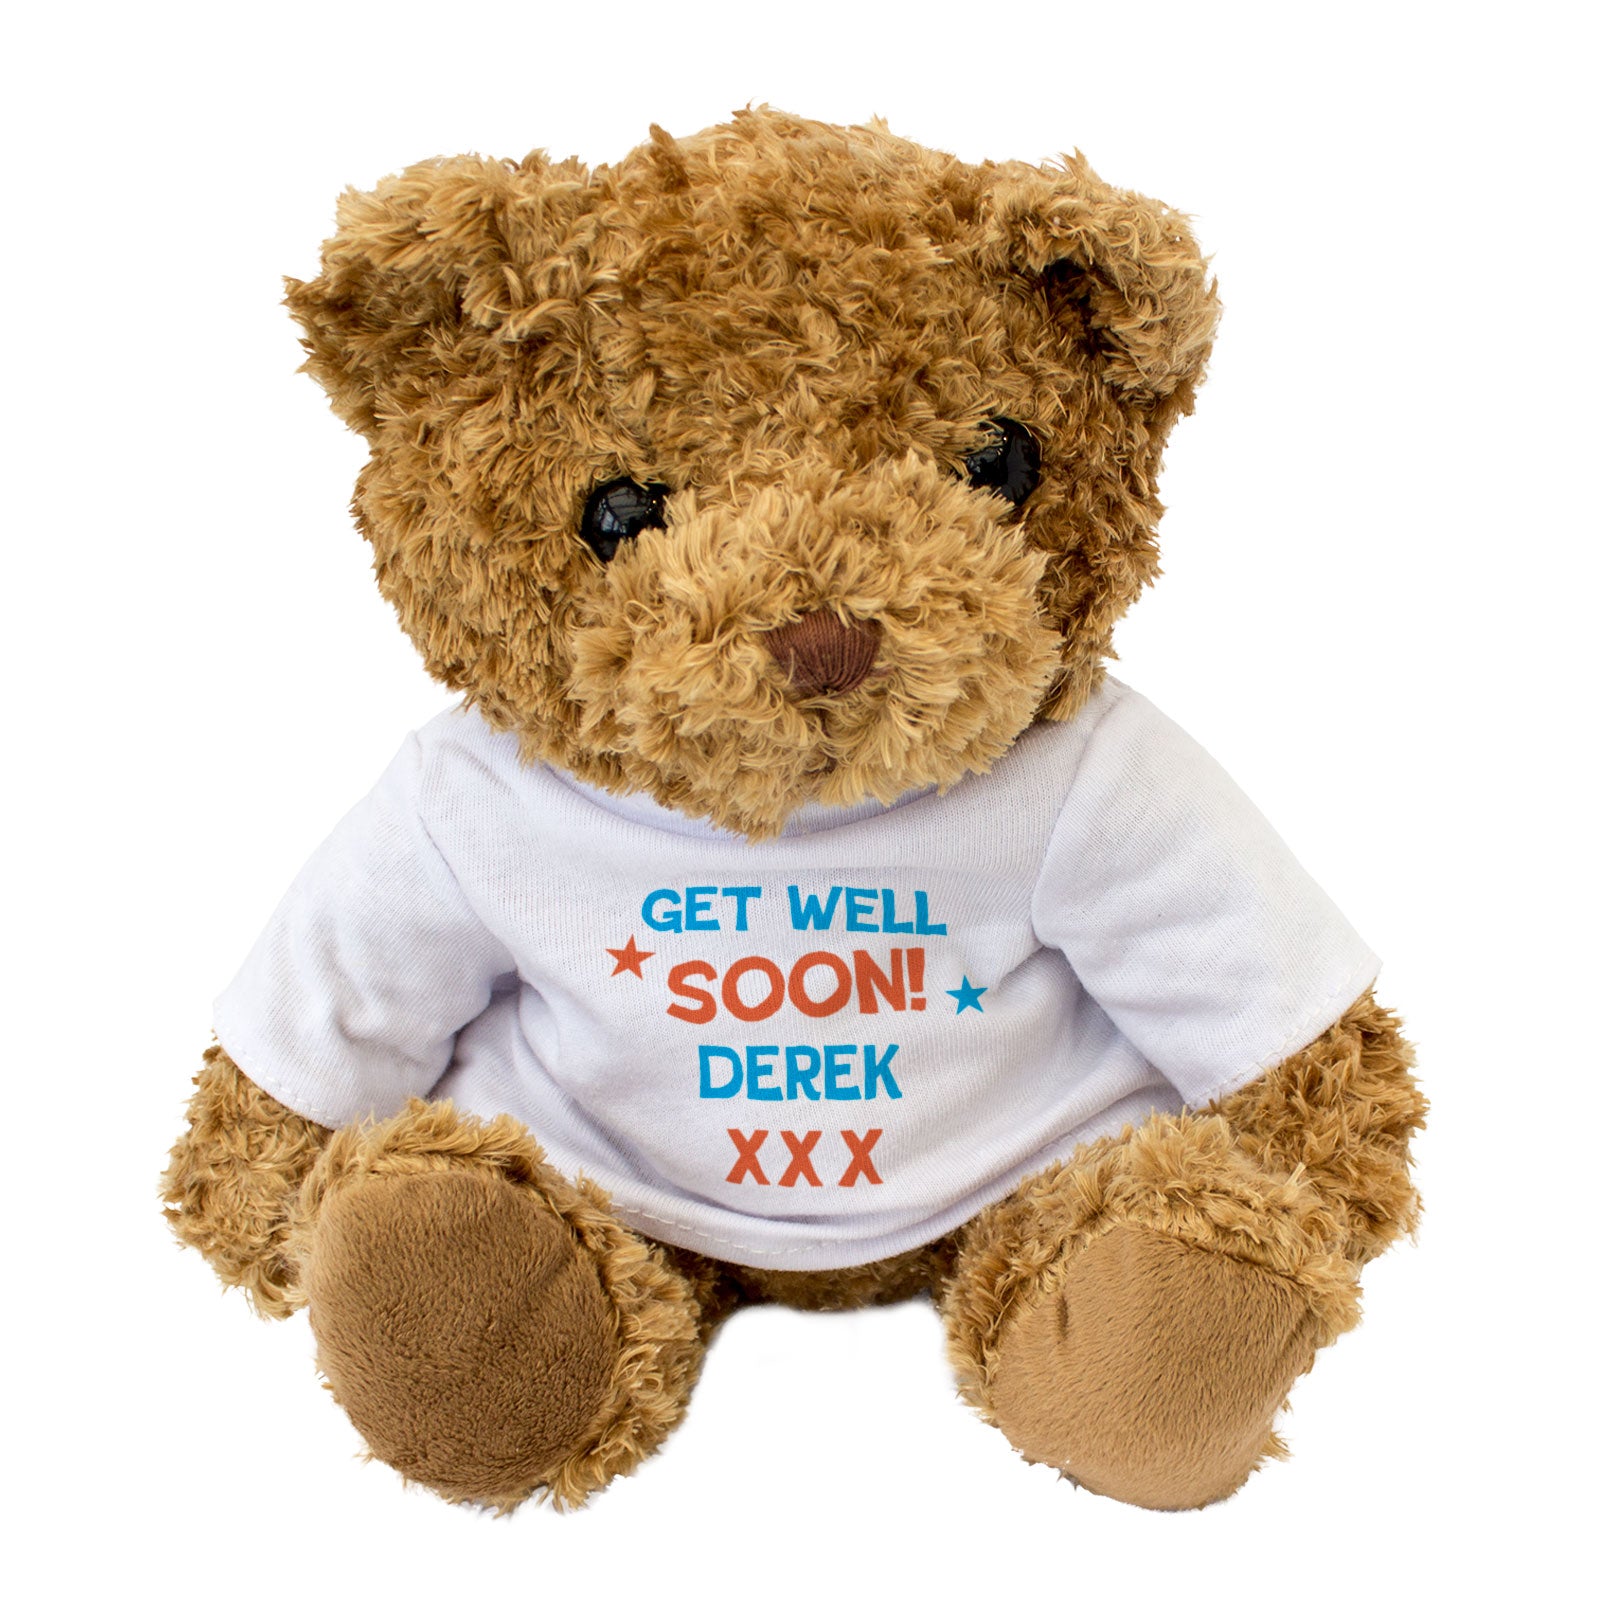 Get Well Soon Derek - Teddy Bear